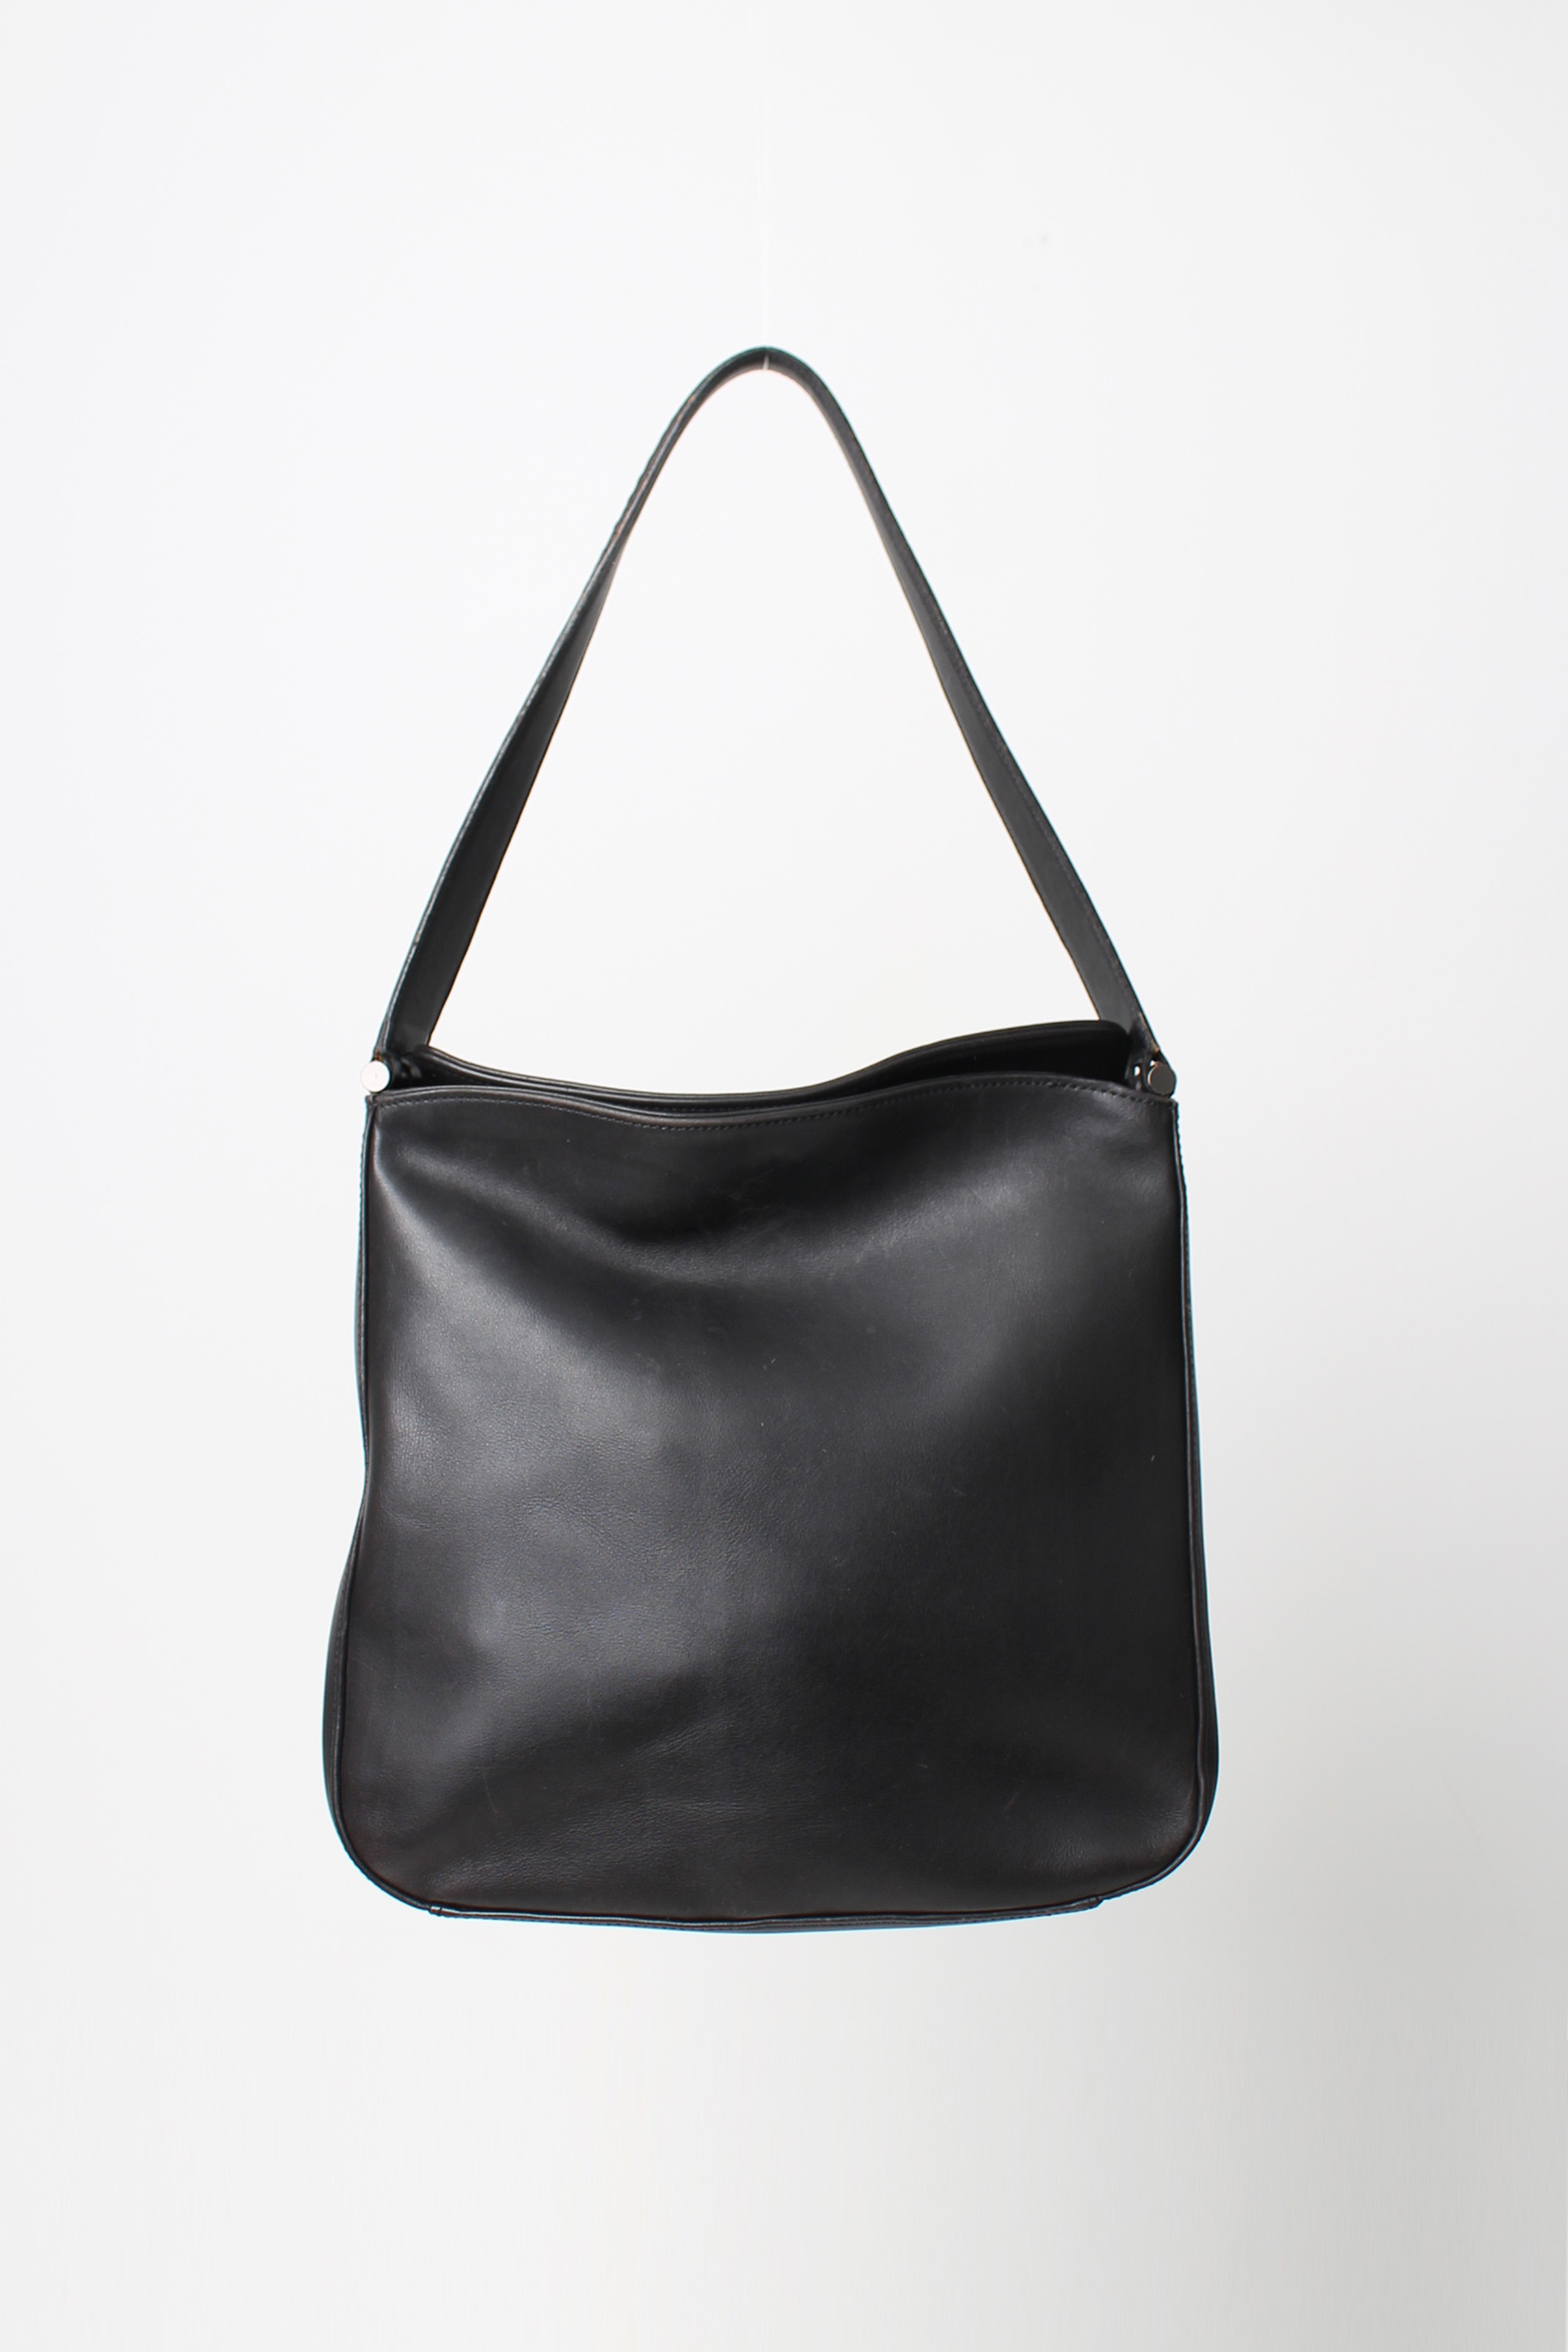 COACH glove tanned leather shoulder bag